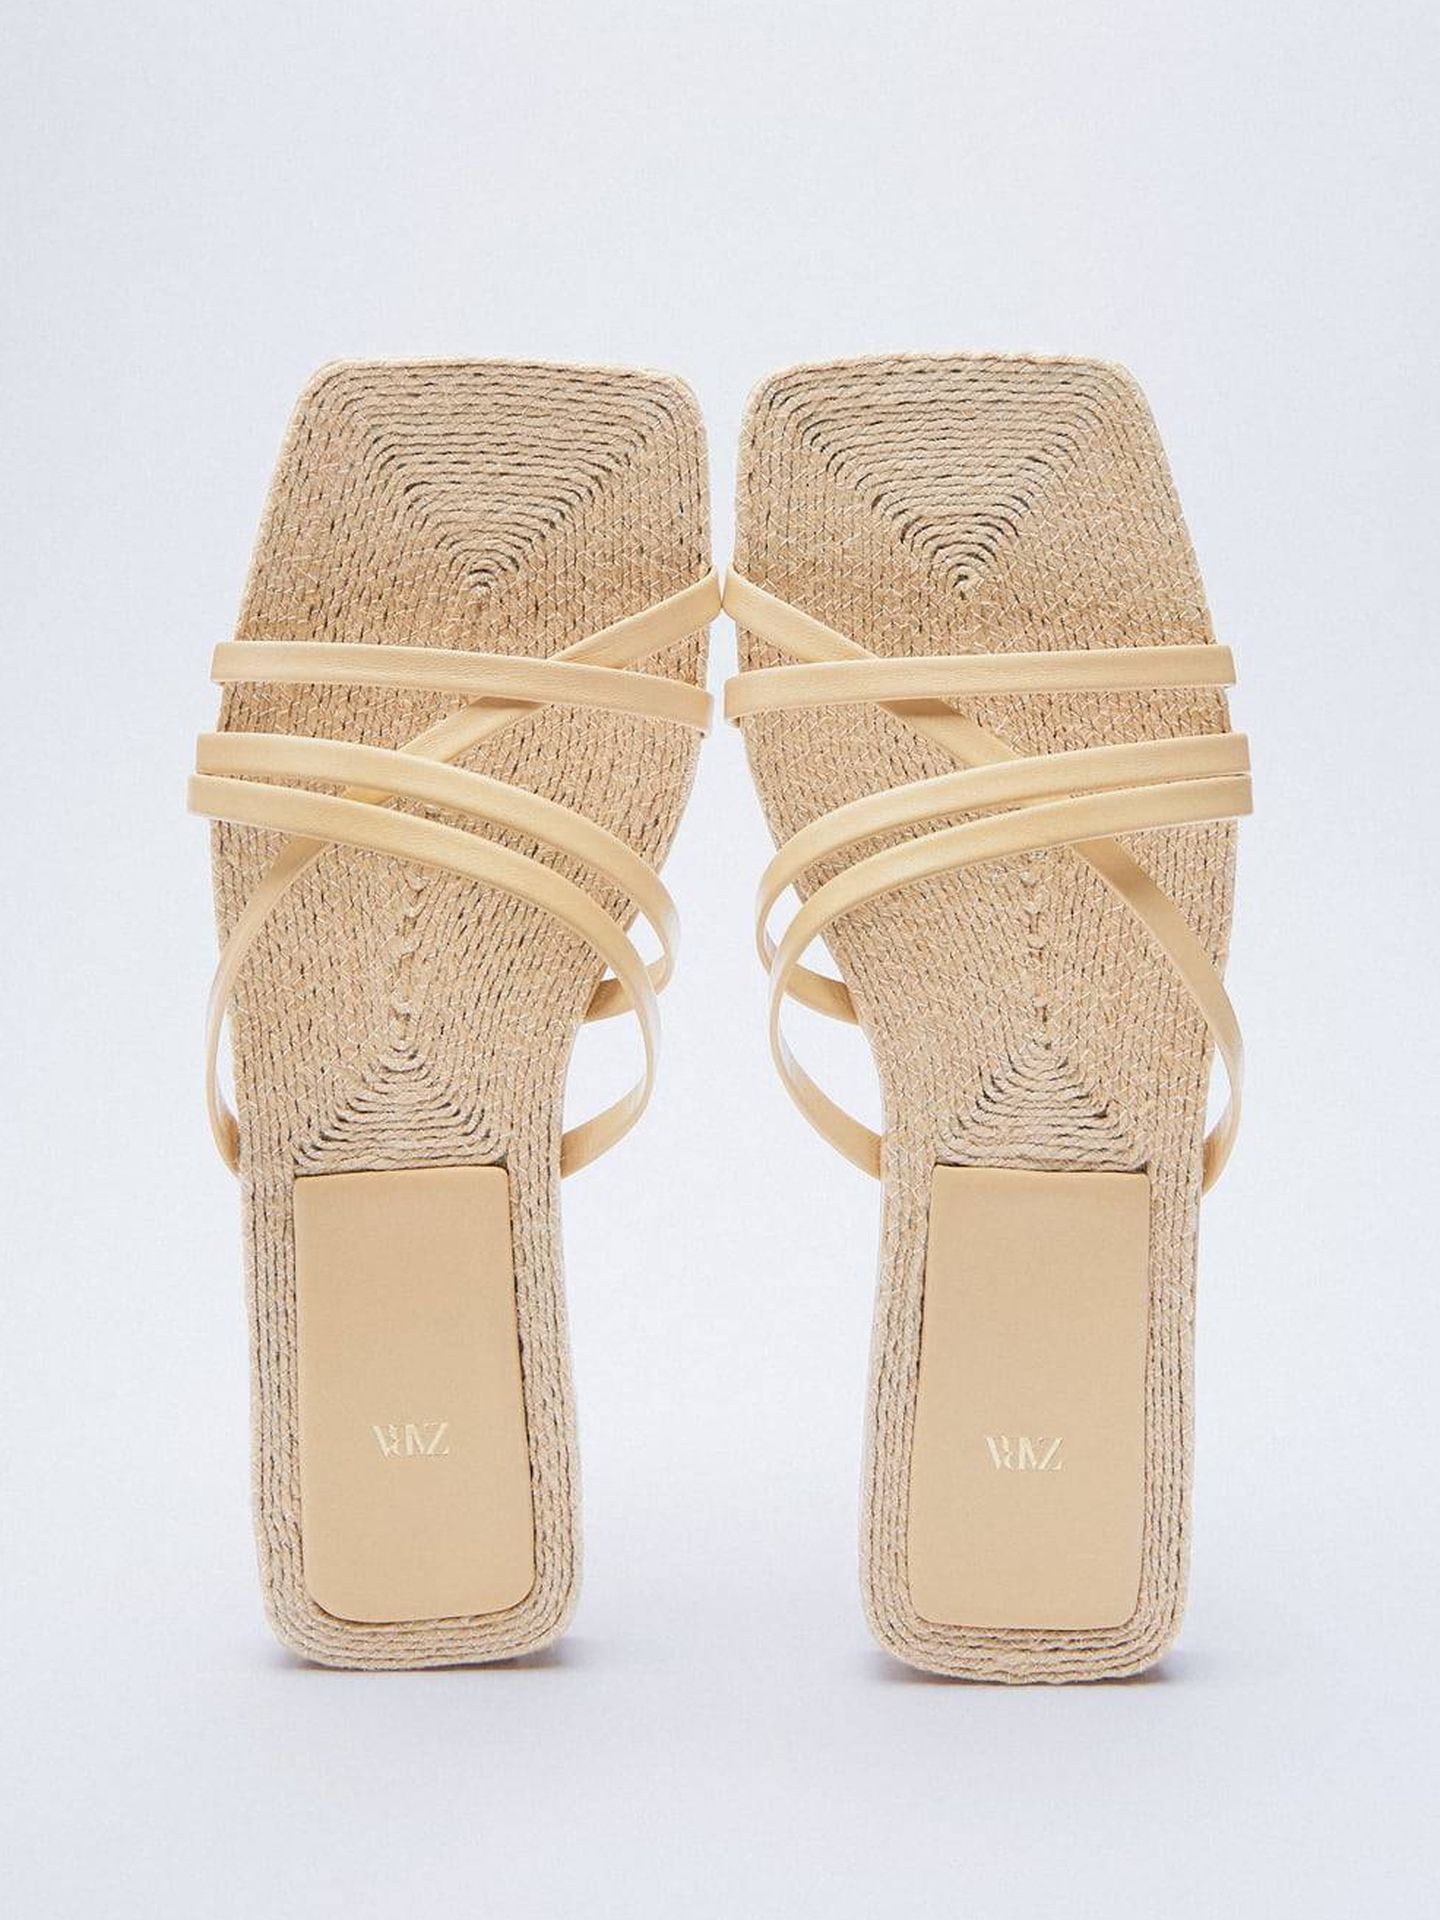 Sandalias de Zara. (Cortesía)